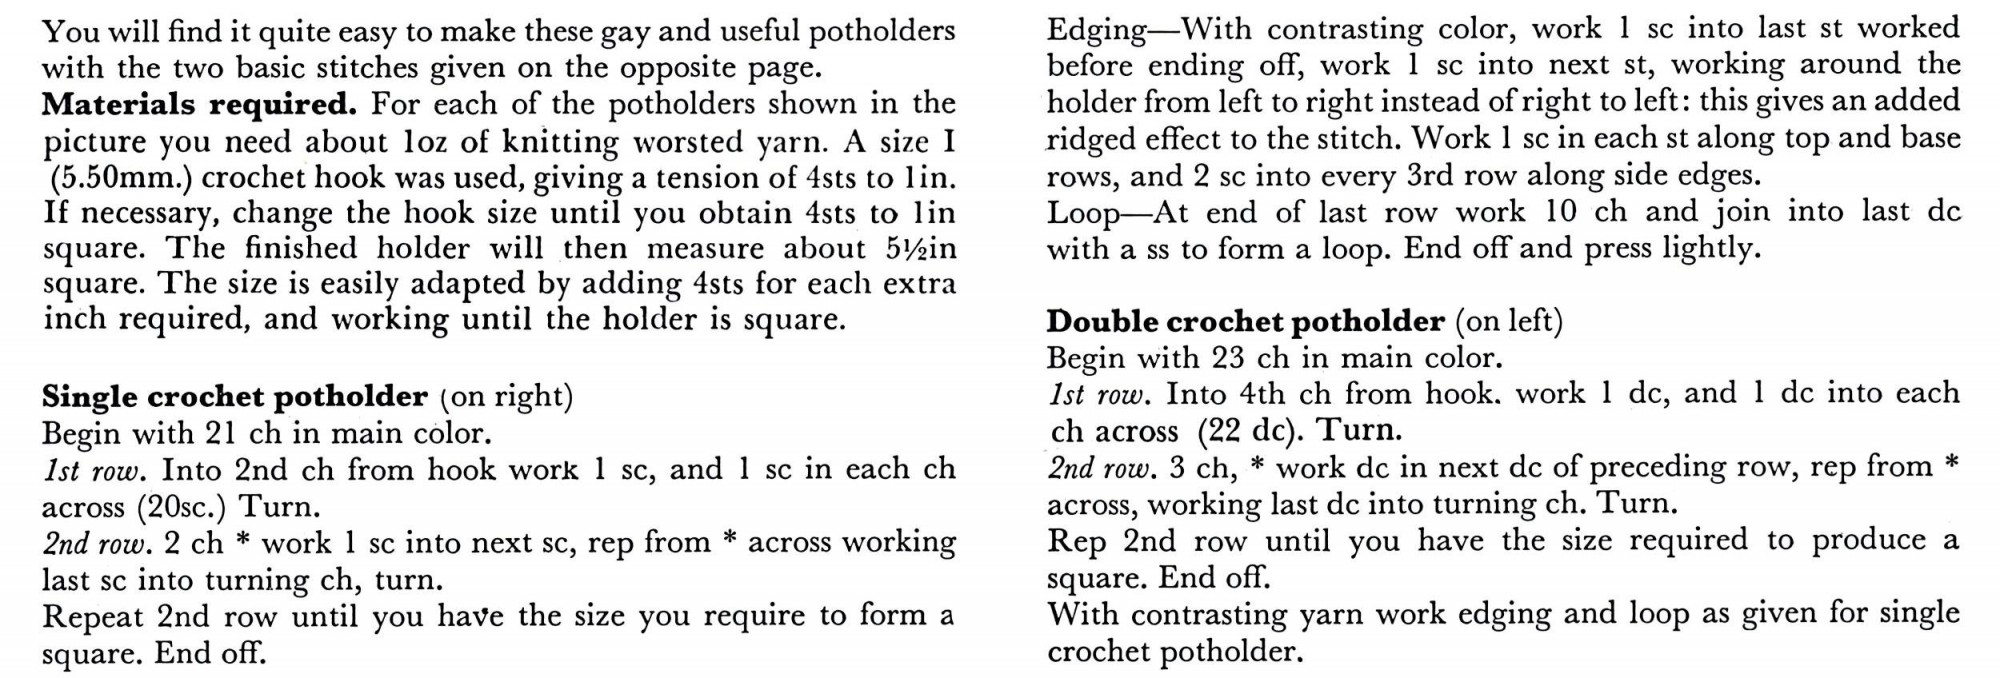 crochet potholder instructions